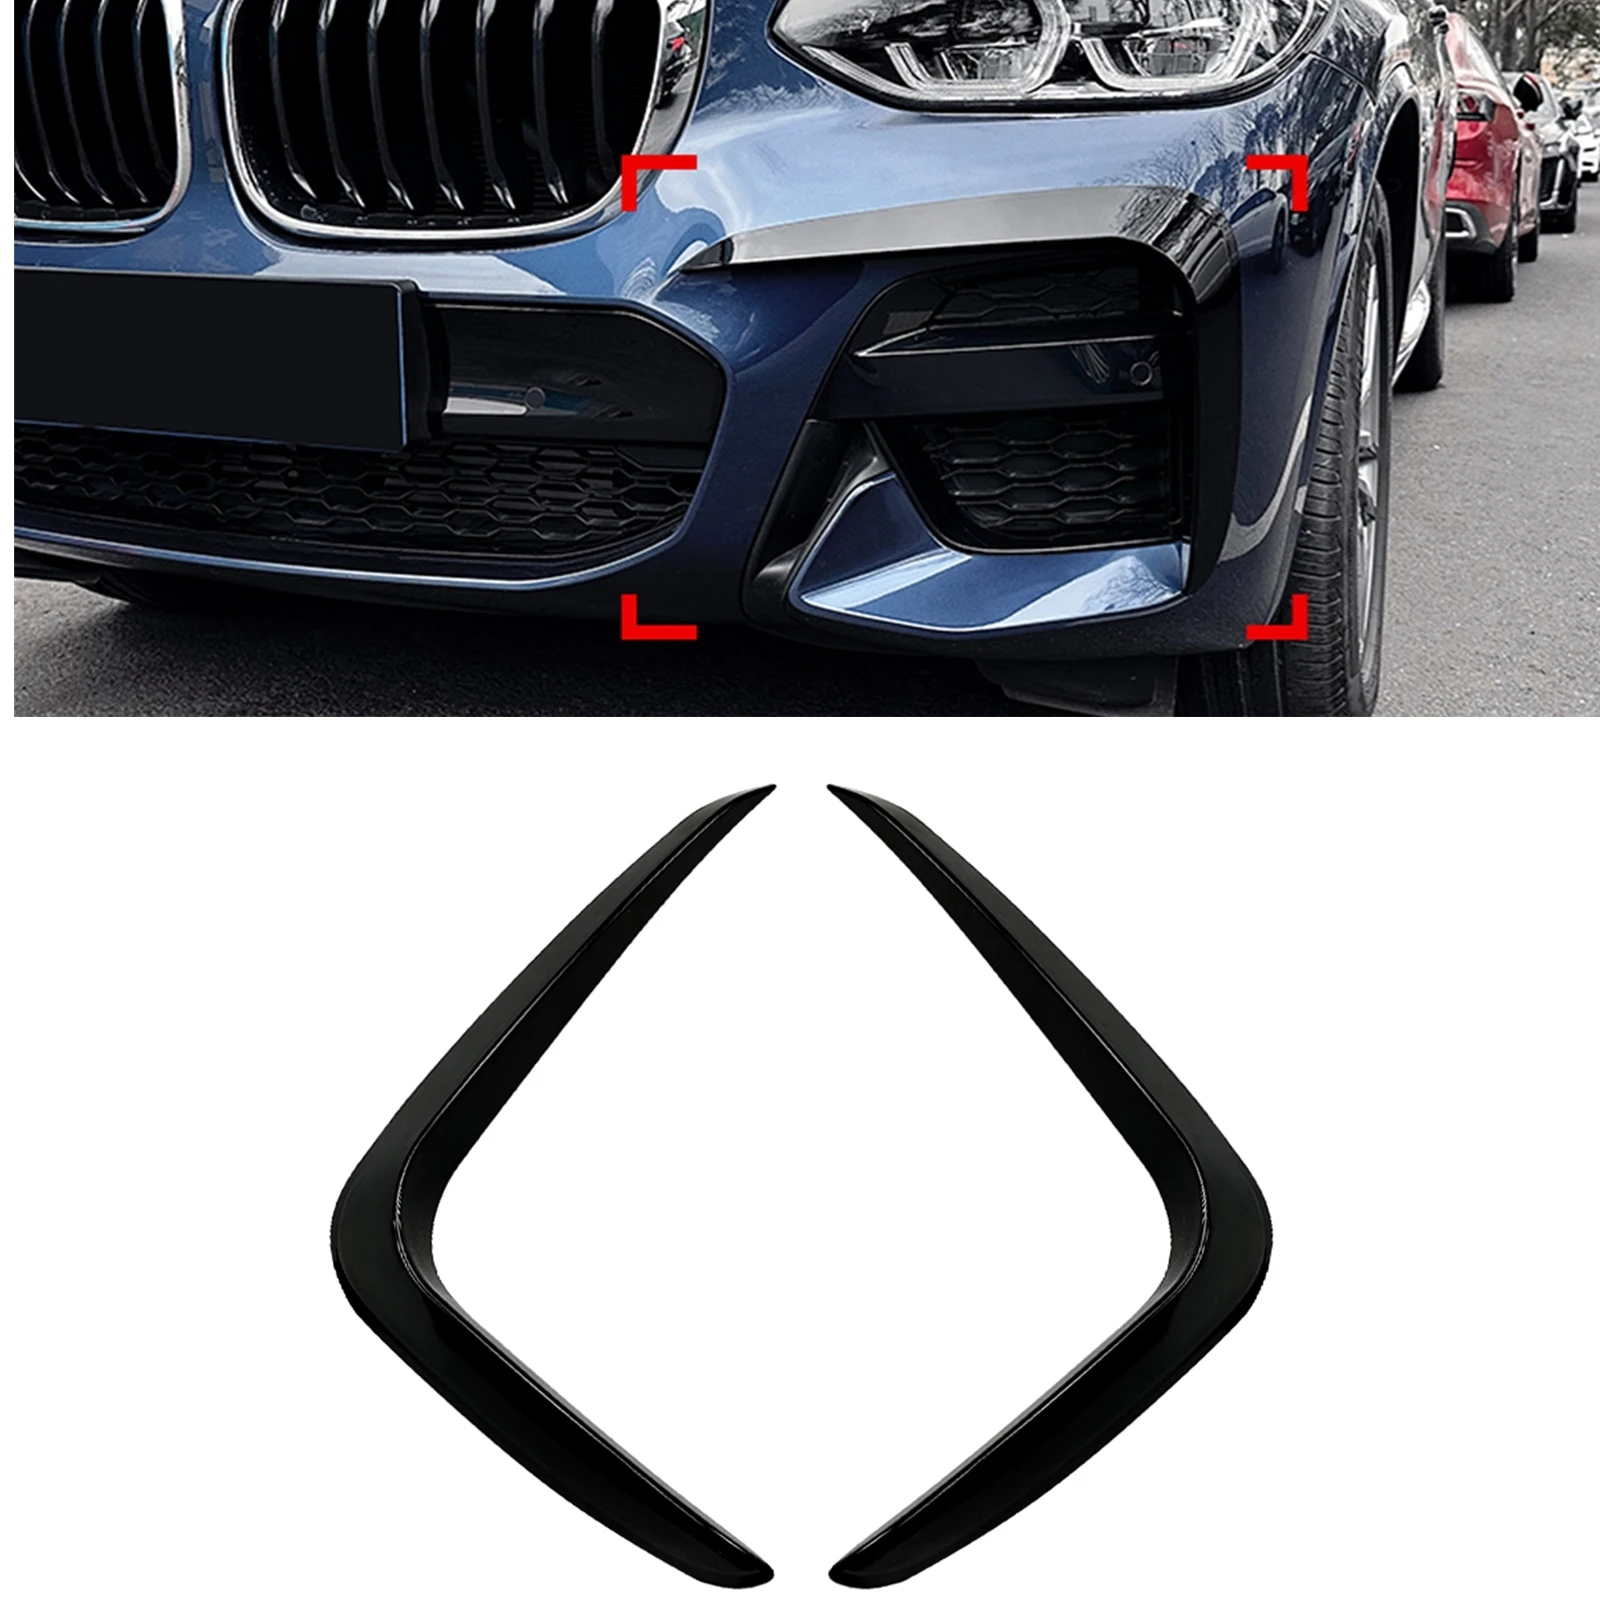 

2PCS Head Light Eyebrow Trim Front Cover Sticker Brow Headlamp Eyelid For BMW X3 X4 G01 G02 M Sport 2018-2021